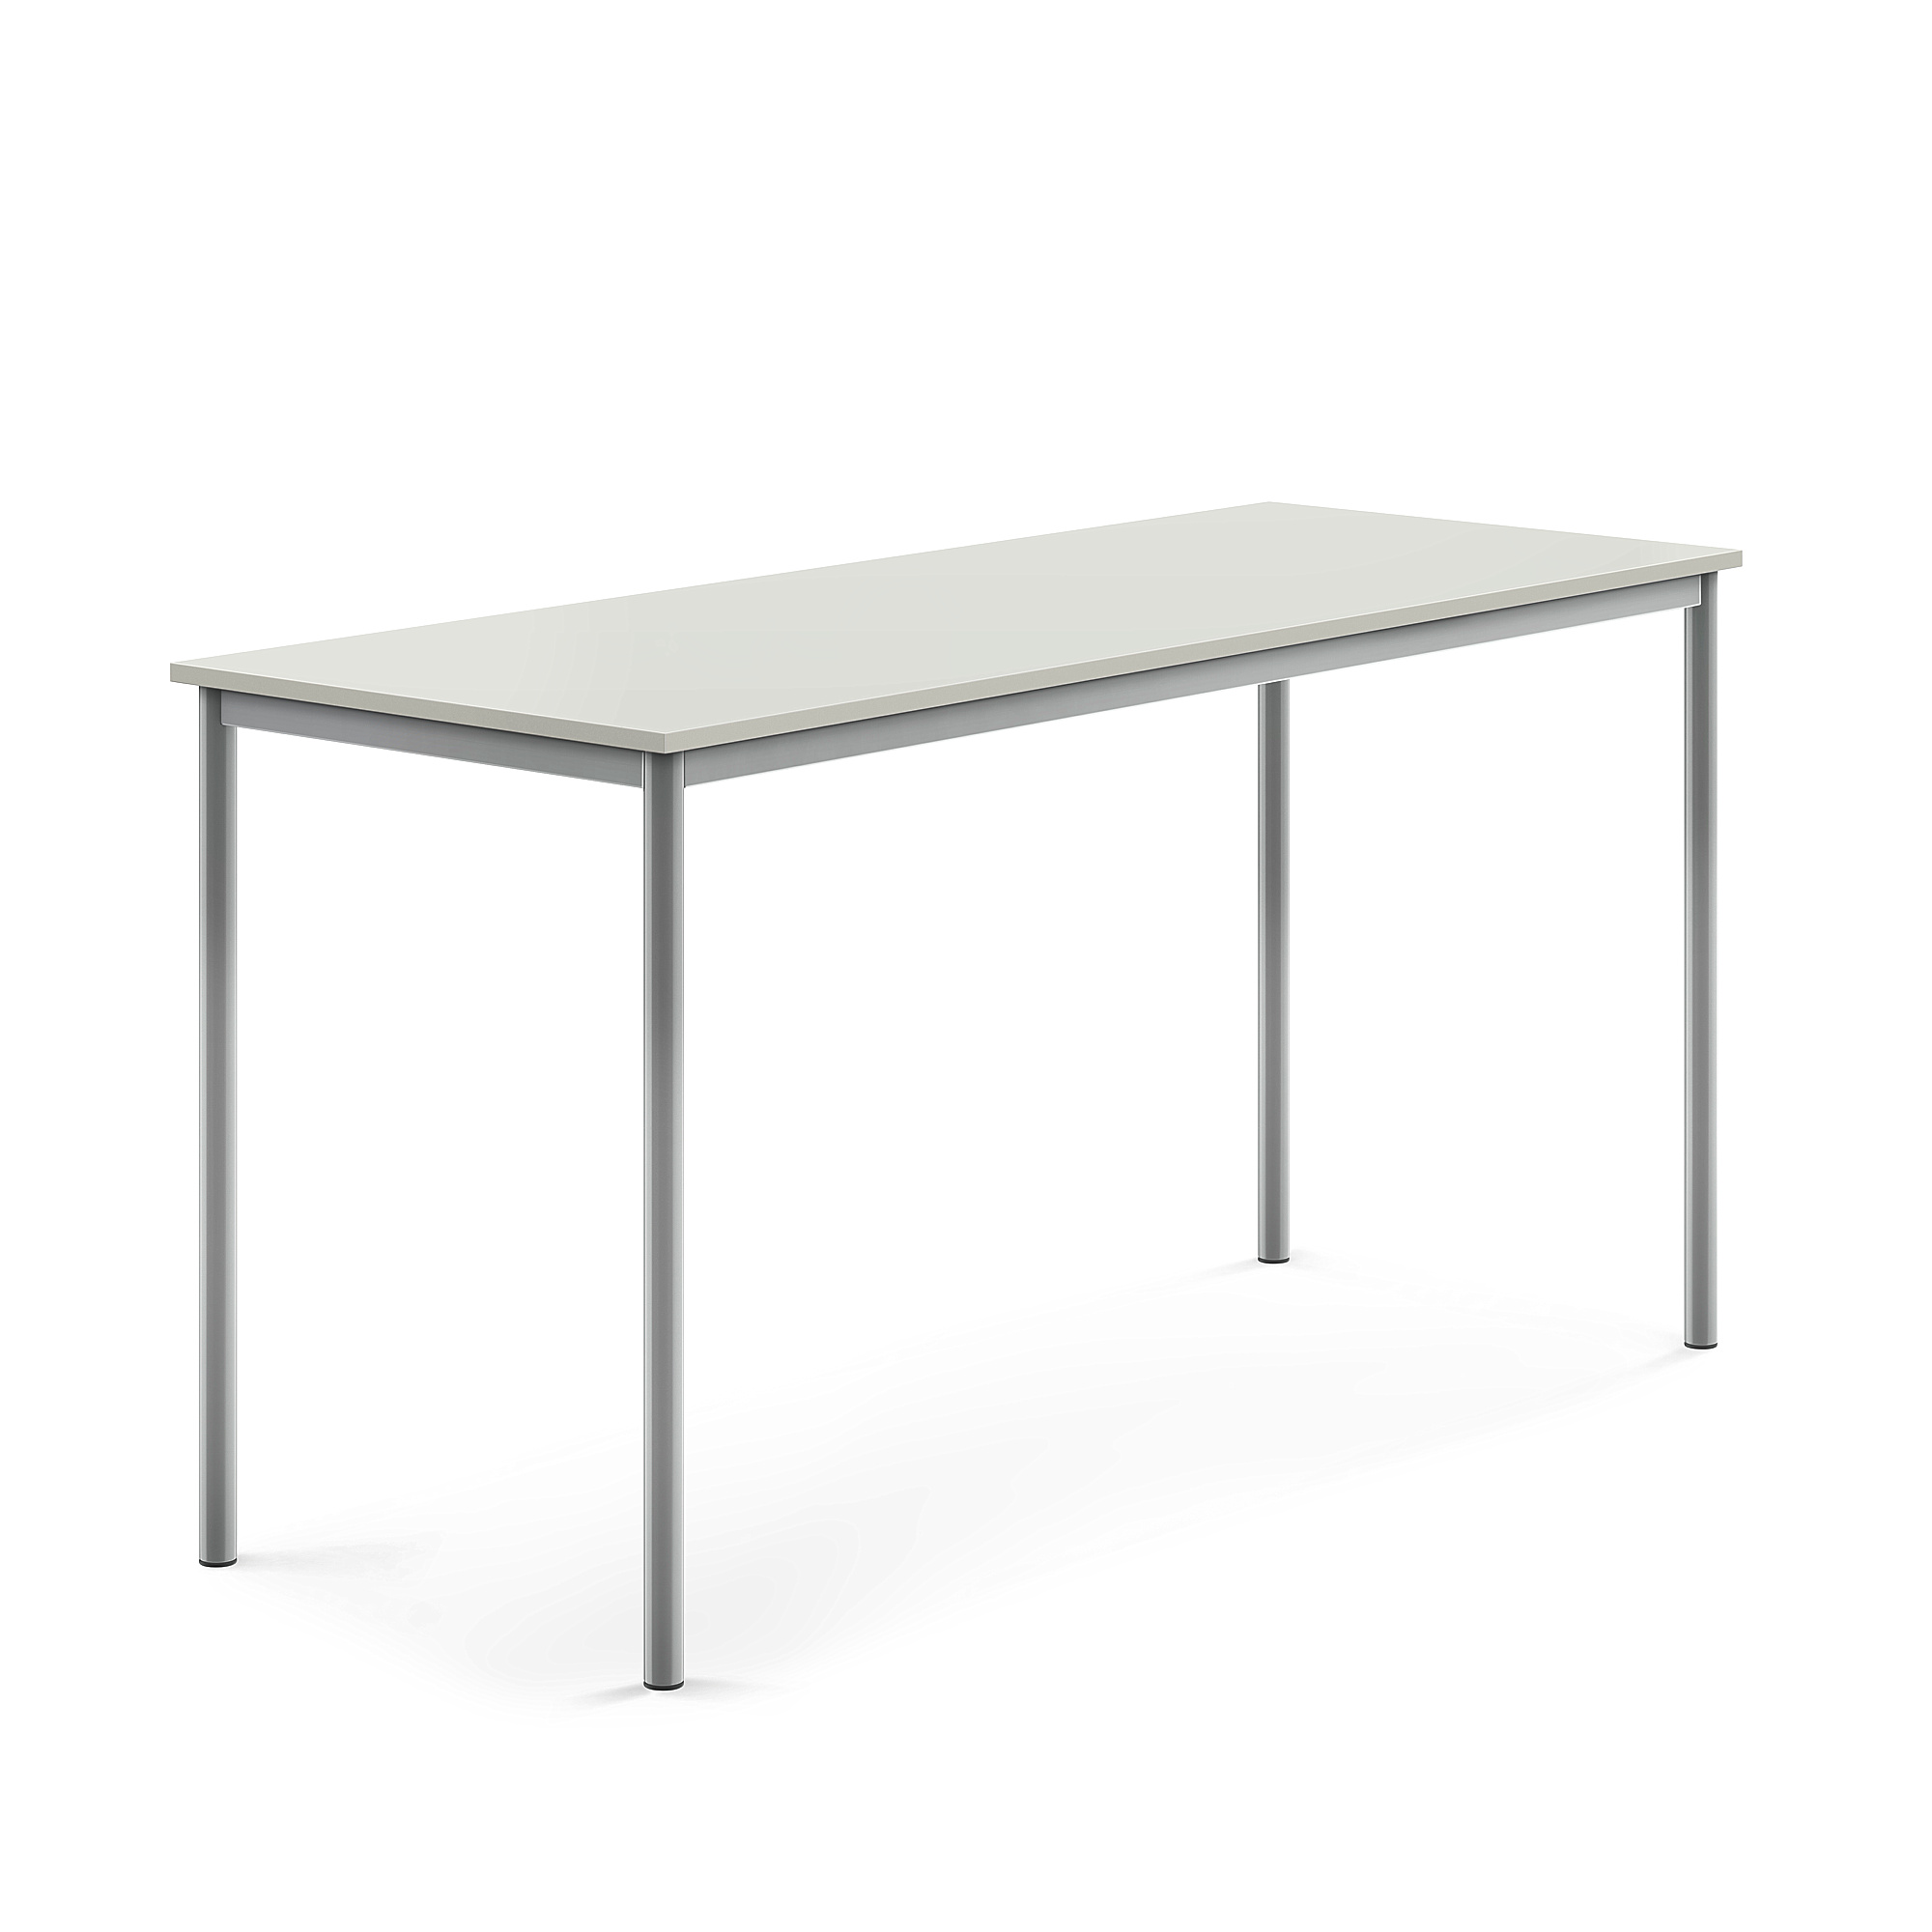 Stůl BORÅS, 1800x700x900 mm, stříbrné nohy, HPL deska, šedá